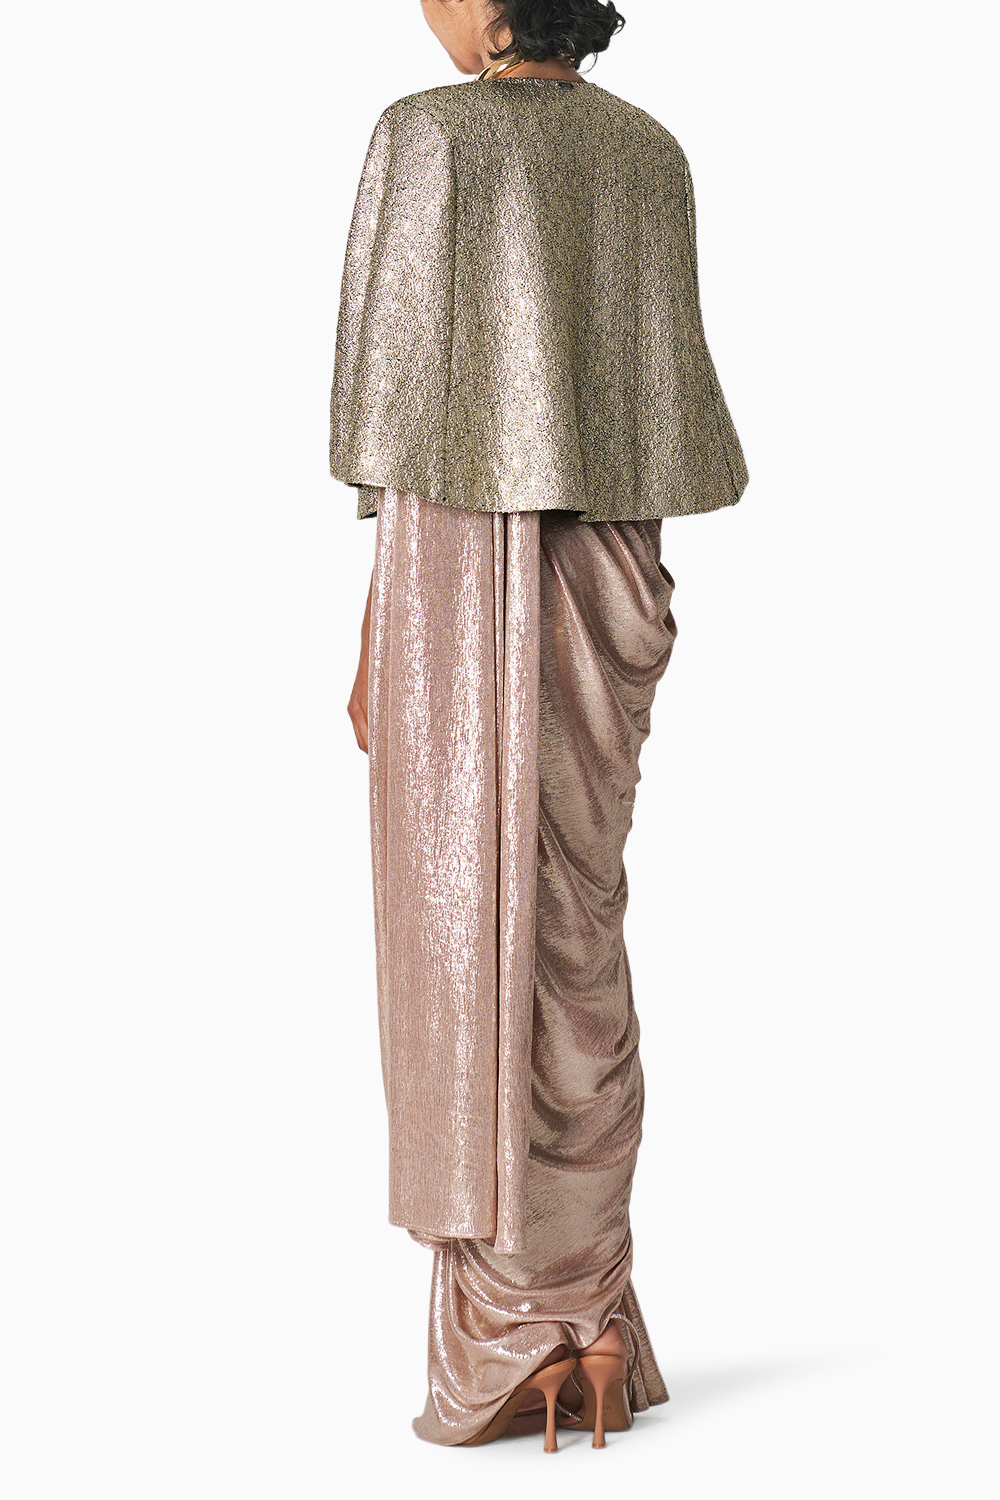 Shea Sari with Pebble Cape